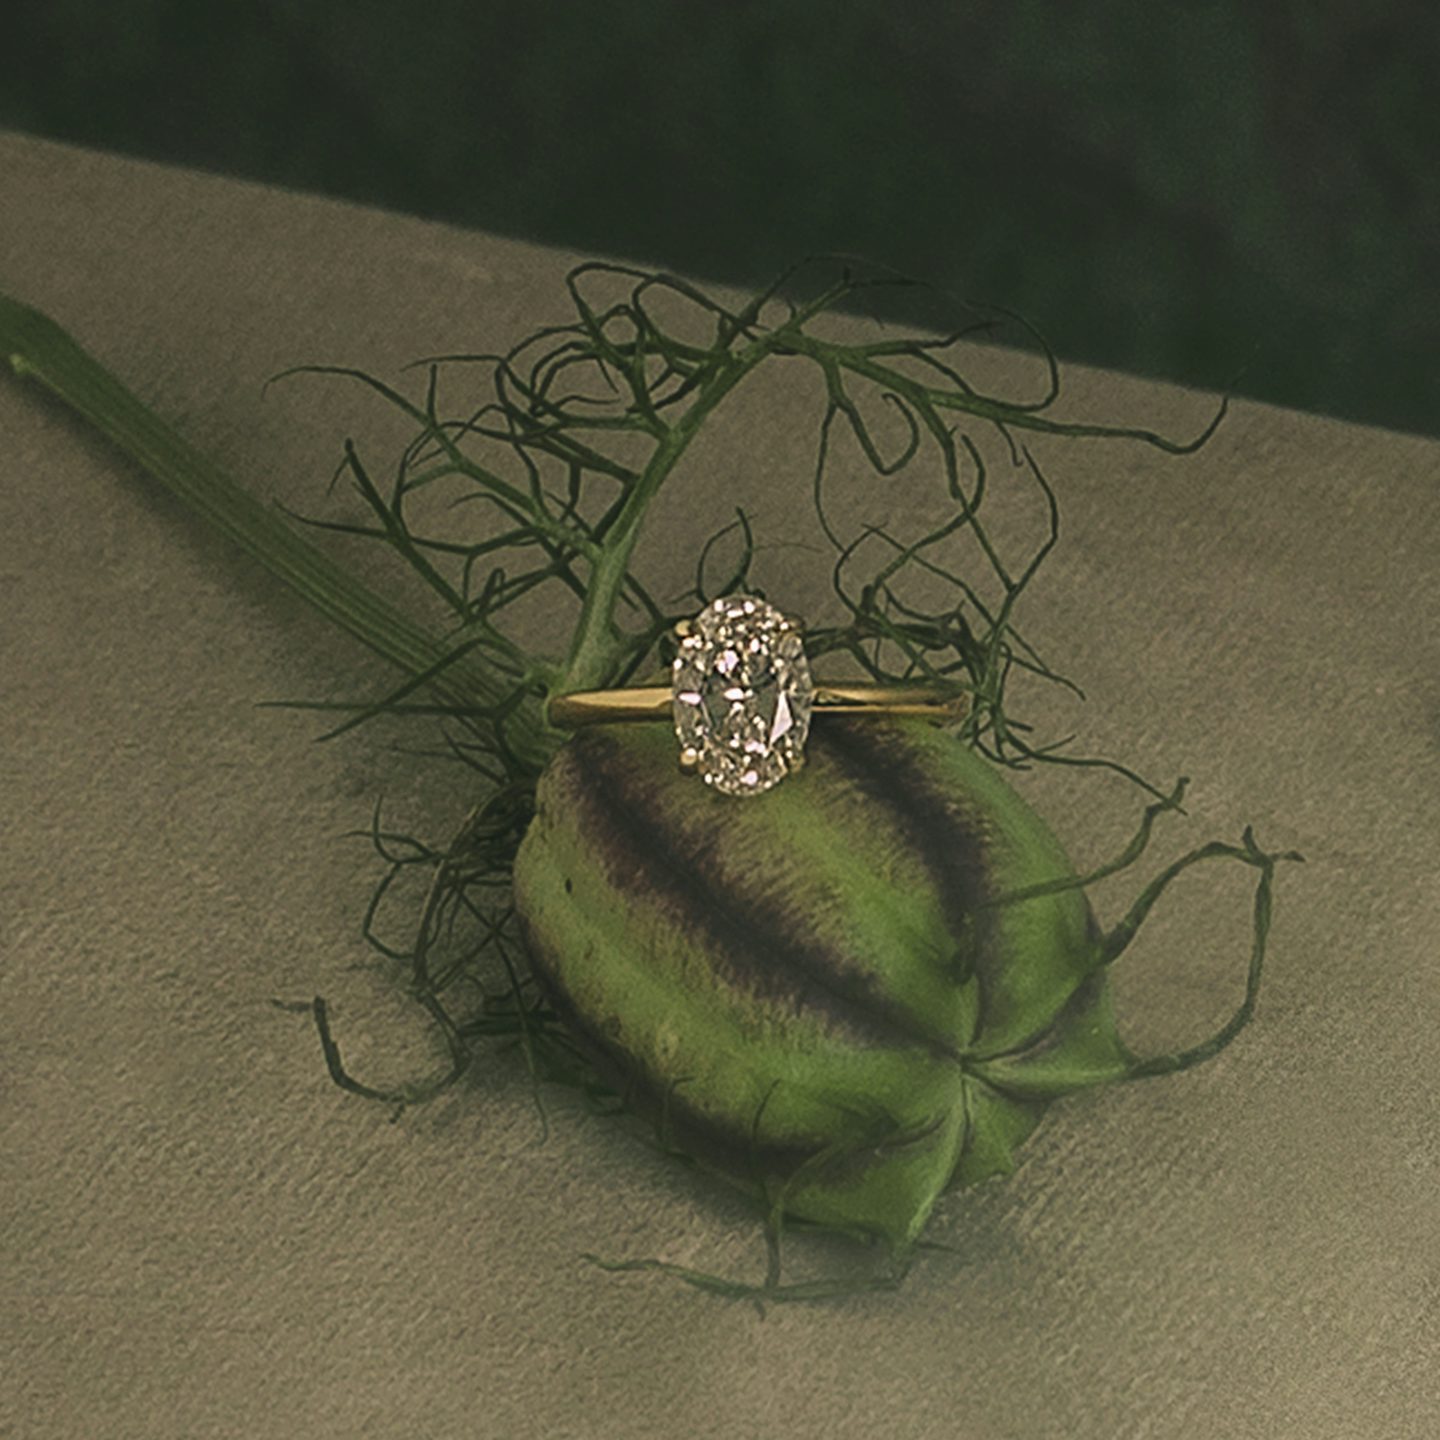 hidden diamond floating engagement ring princess pave yellow gold still life